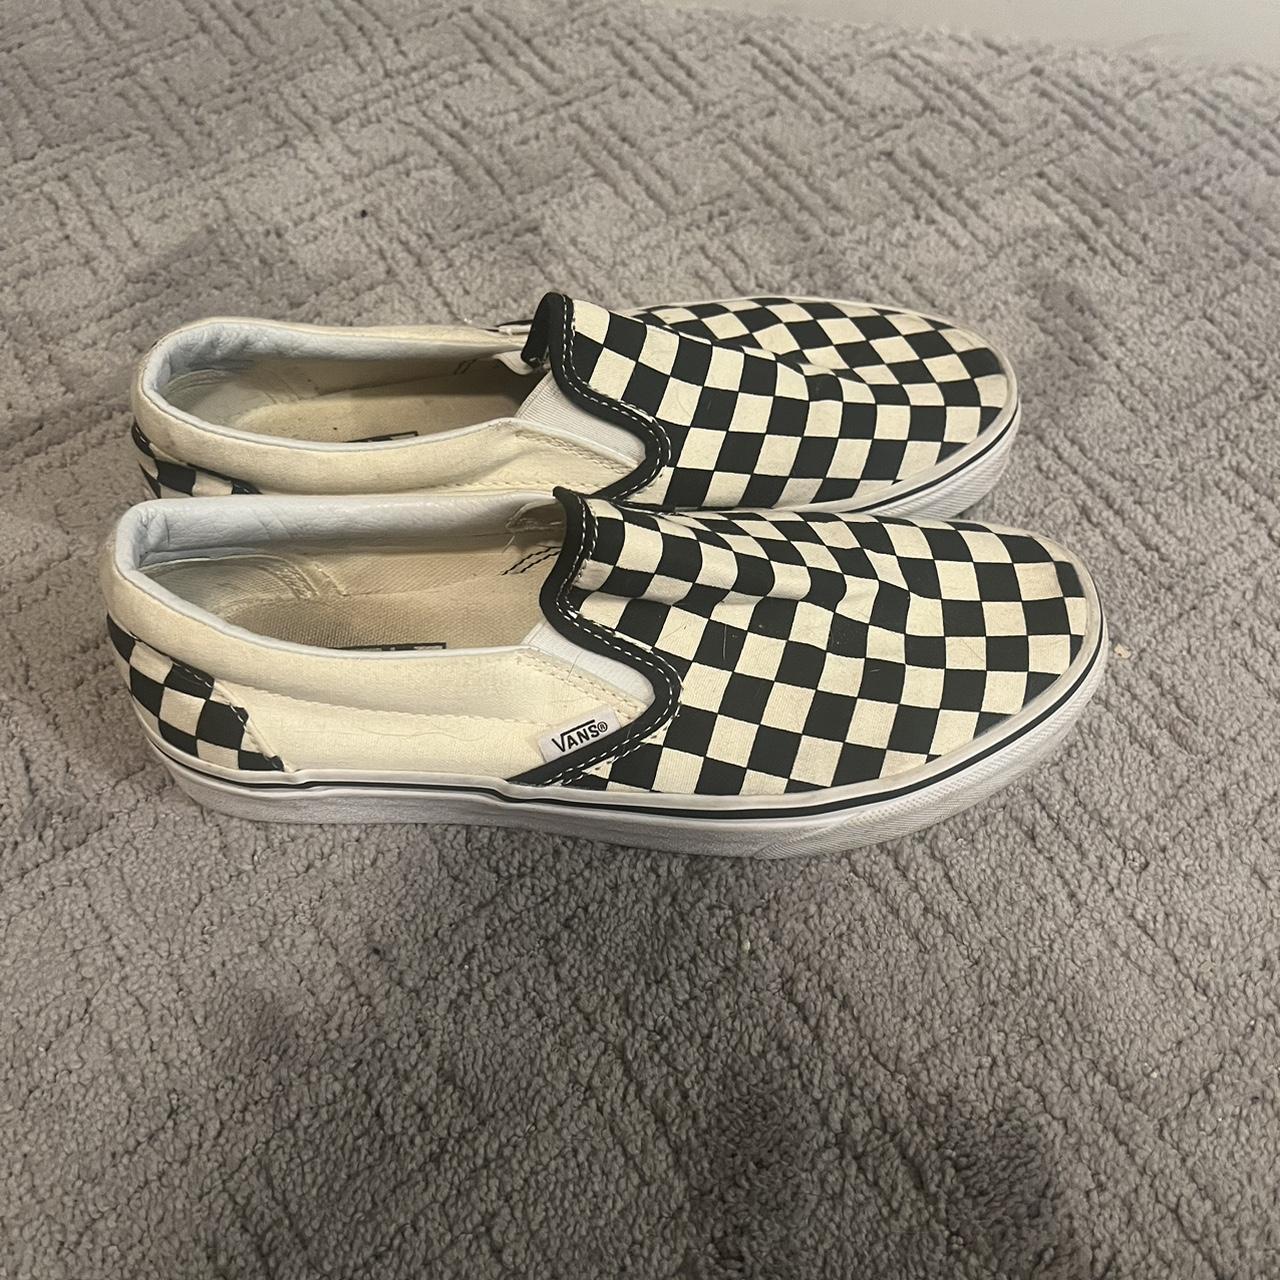 Vans Classic Slip-On Black / White Checkerboard 8.5